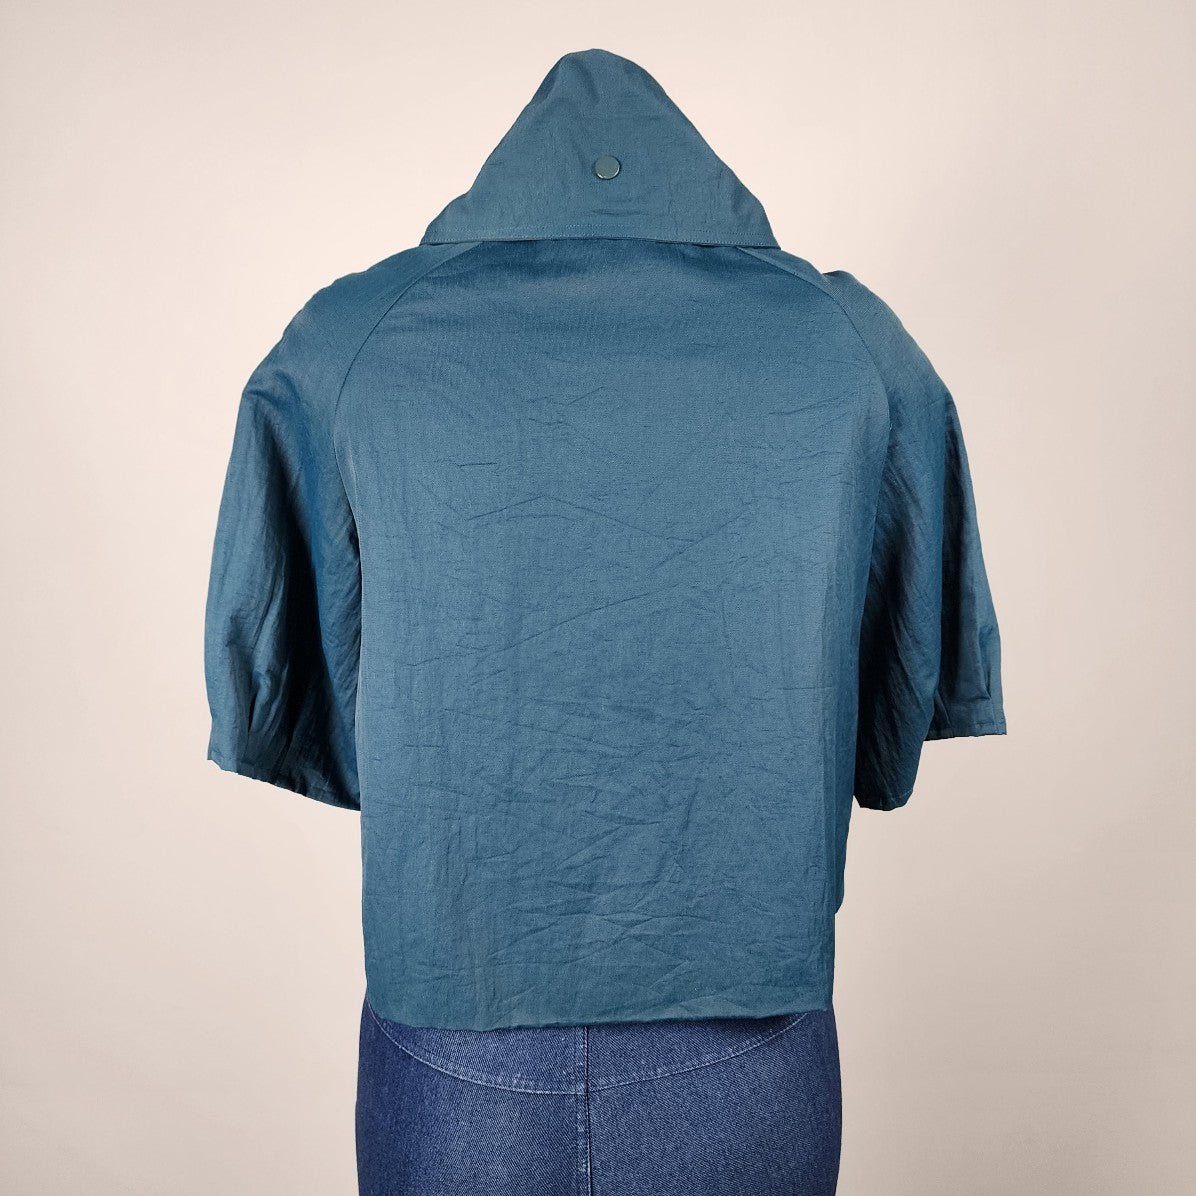 Samuel Dong Blue Cotton Blend Short Sleeve Jacket Size M